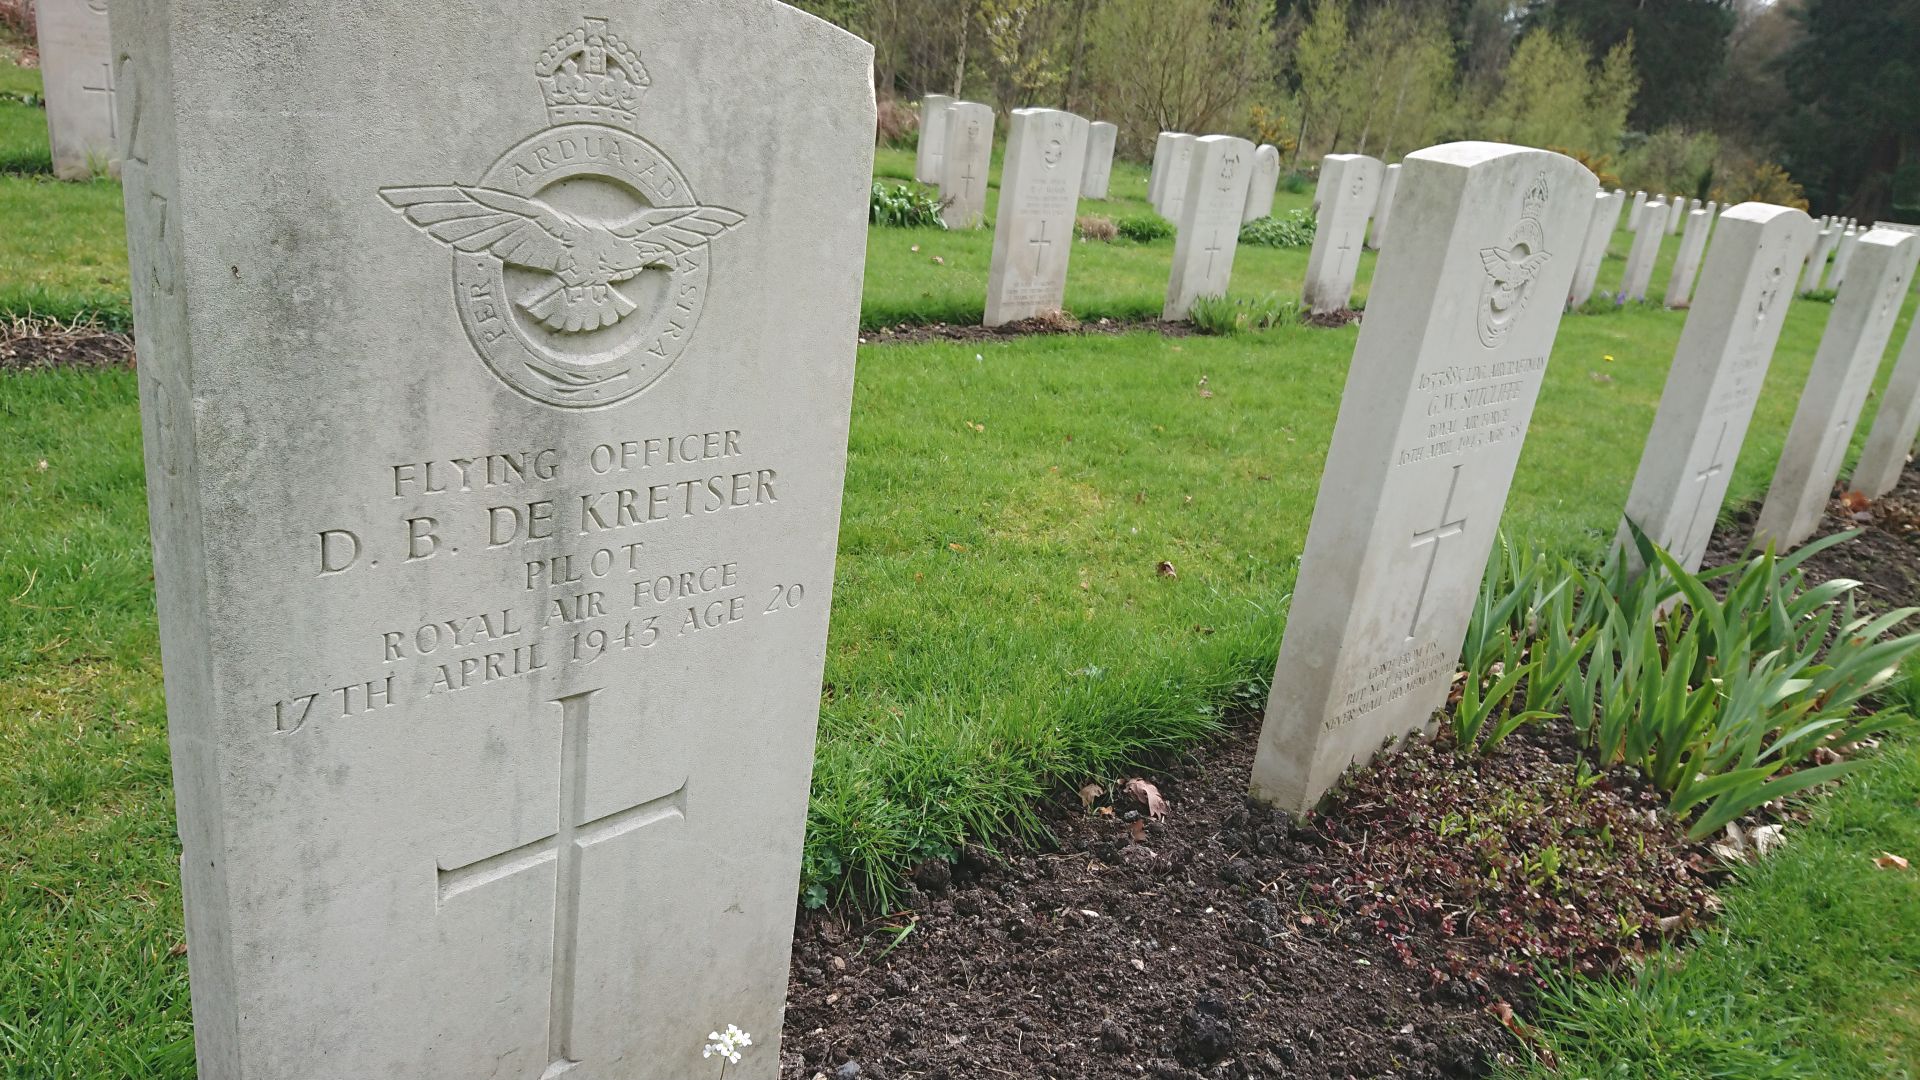 Grave of D B De Kretser
Brookwood Military Cemetery